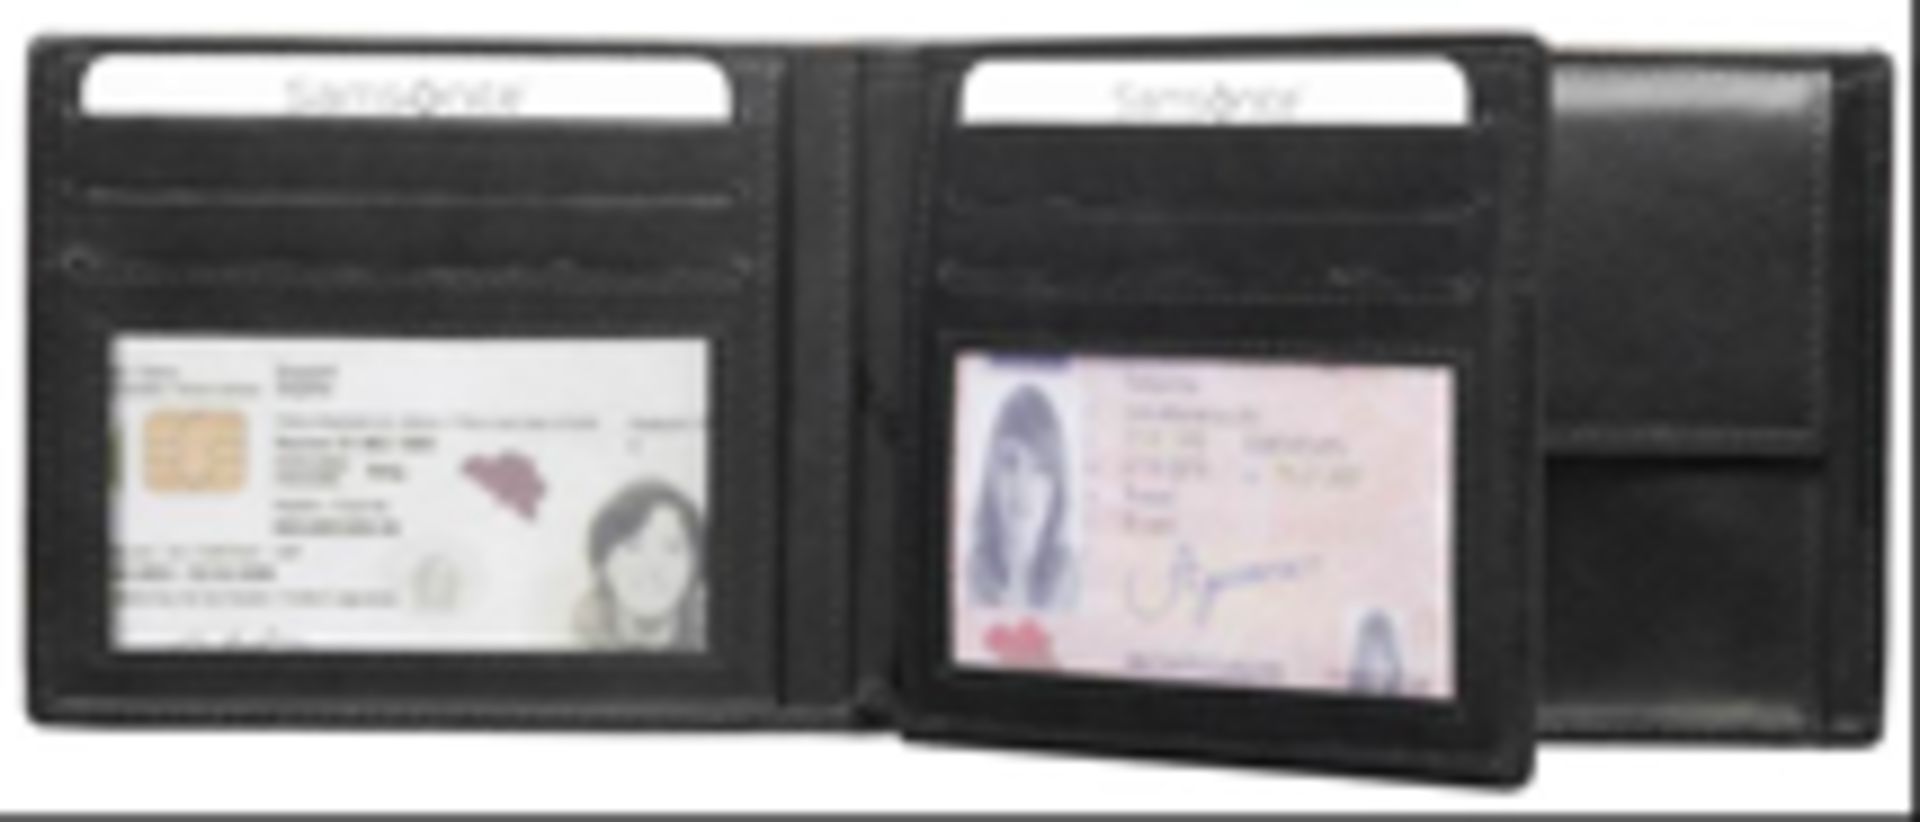 V *TRADE QTY* Brand New Samsonite Gents Black Leather Wallet - 8 Credit Card Slots - 2 Note